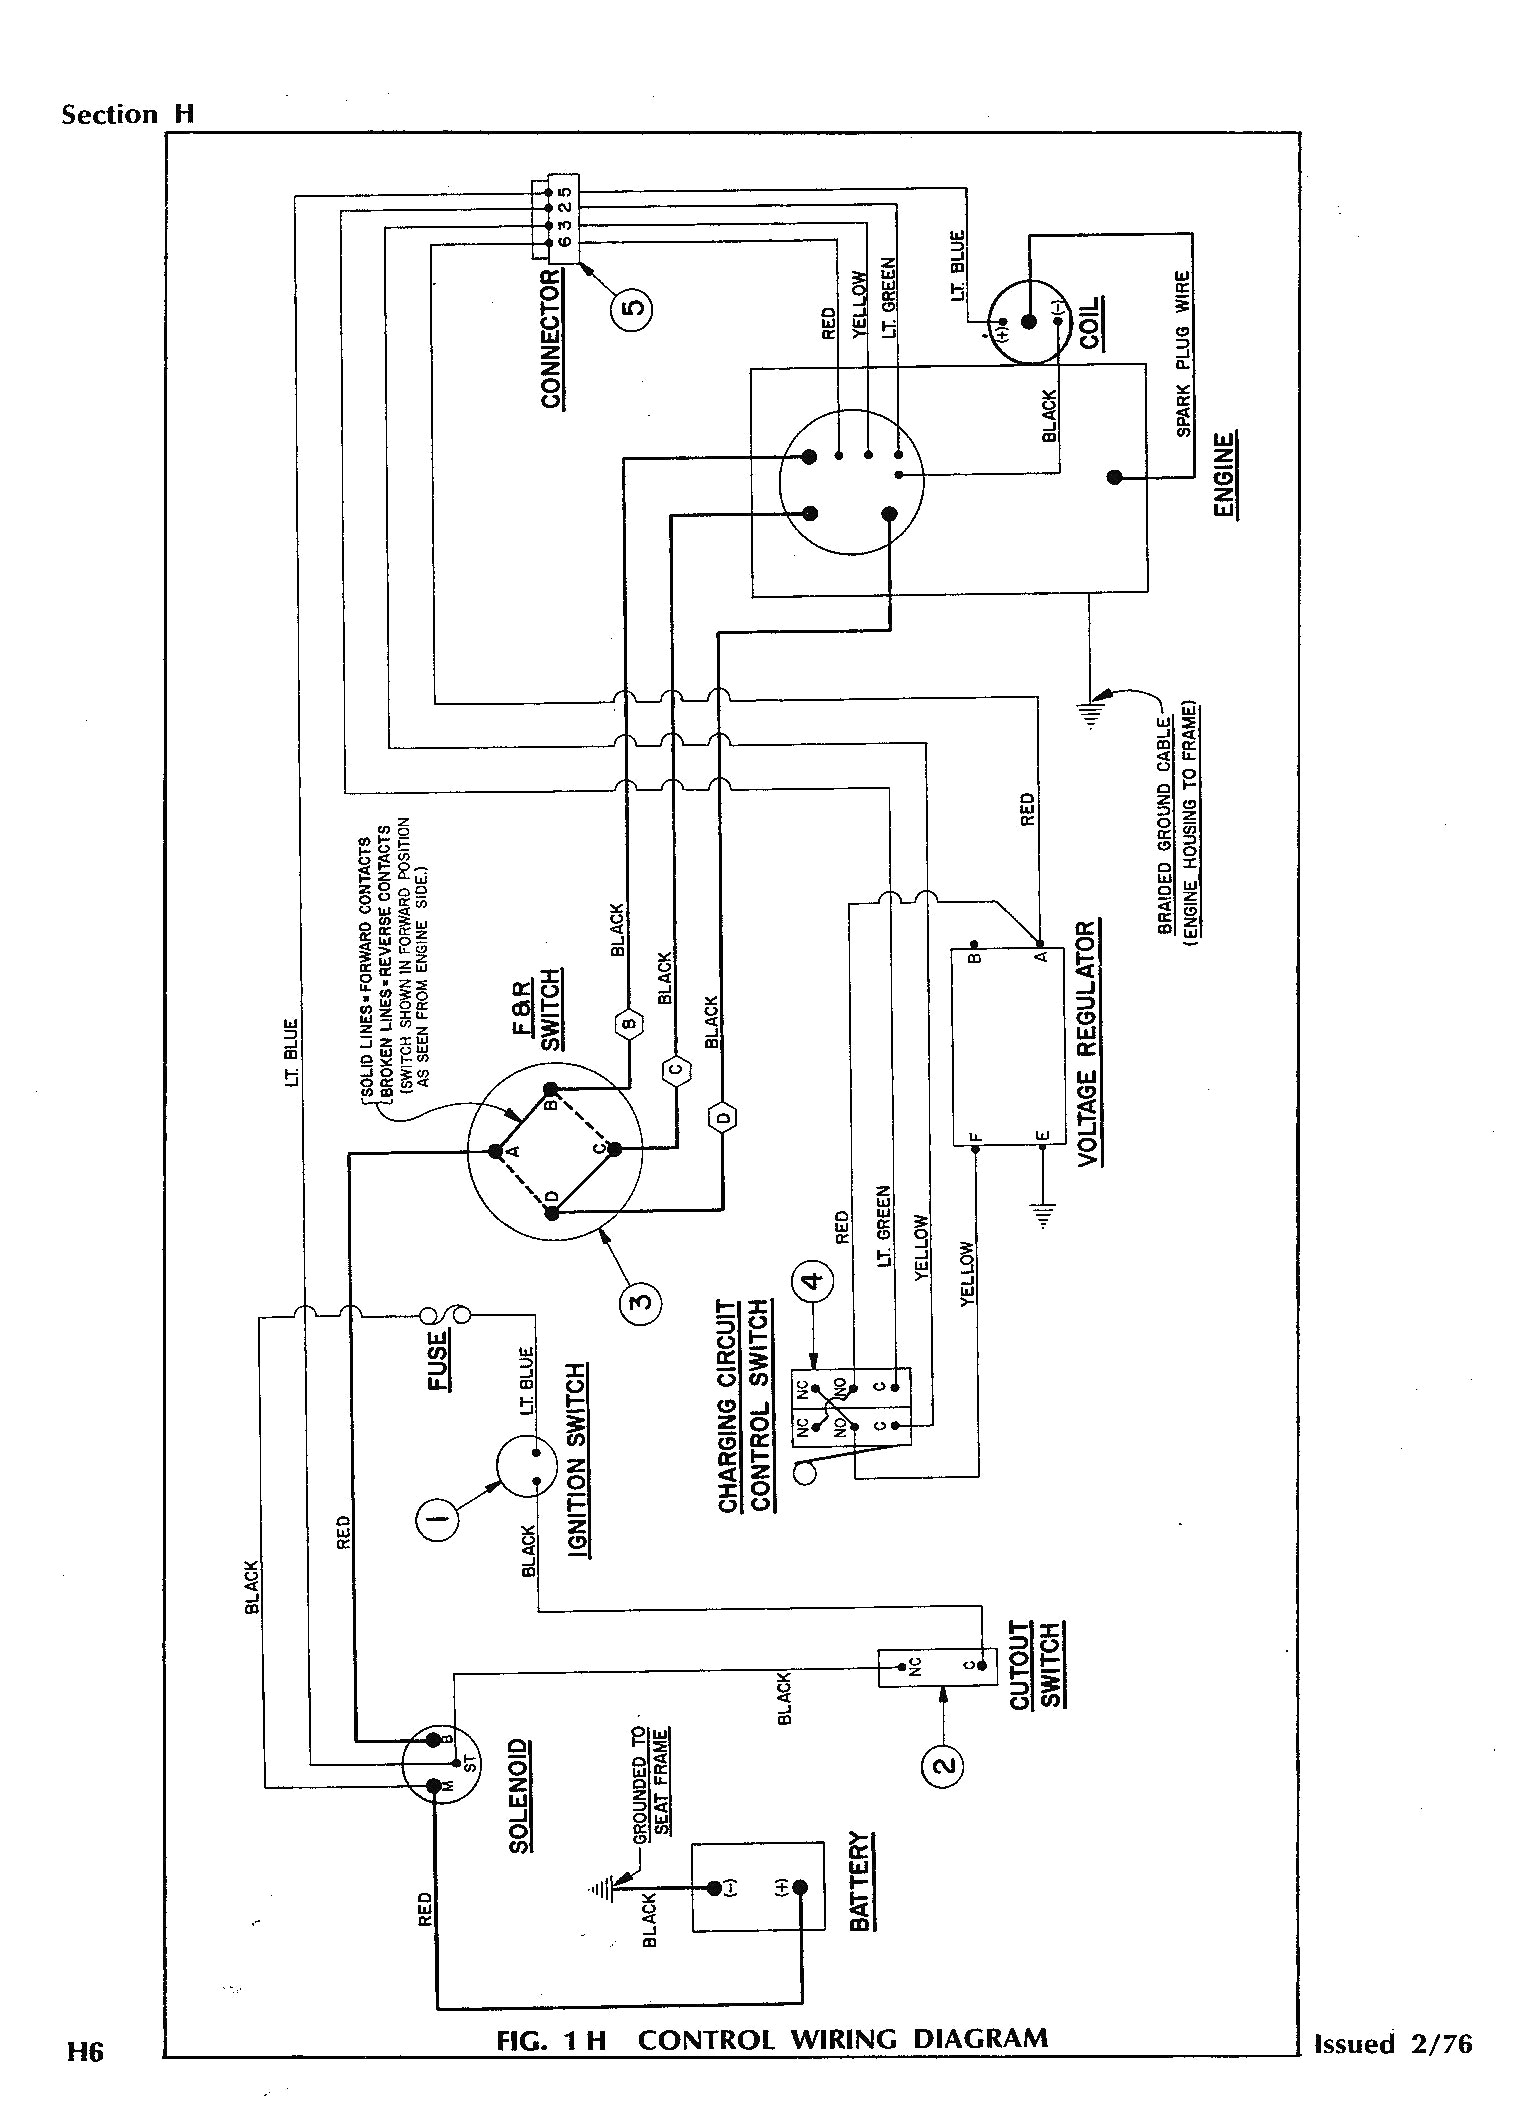 1999 ez go wiring diagram wiring diagram used 1999 ezgo 36 volt wiring diagram 1999 ezgo wiring diagram source 1999 ezgo golf cart